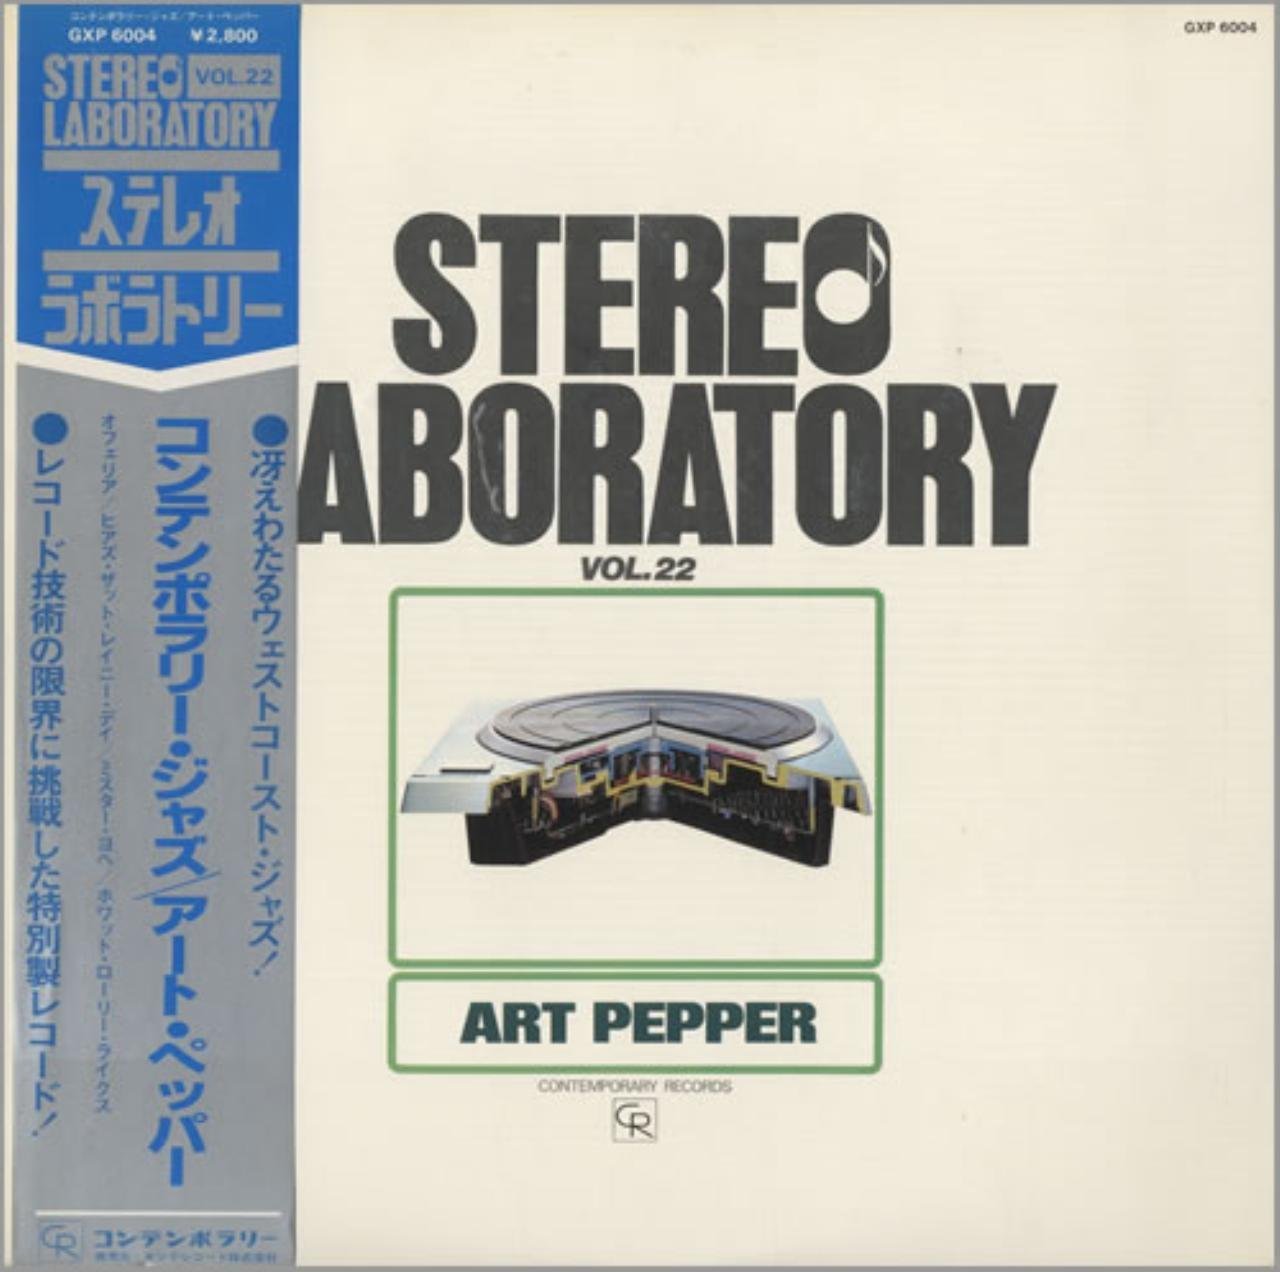 ART PEPPER - Stereo Laboratory Series Vol.22 cover 